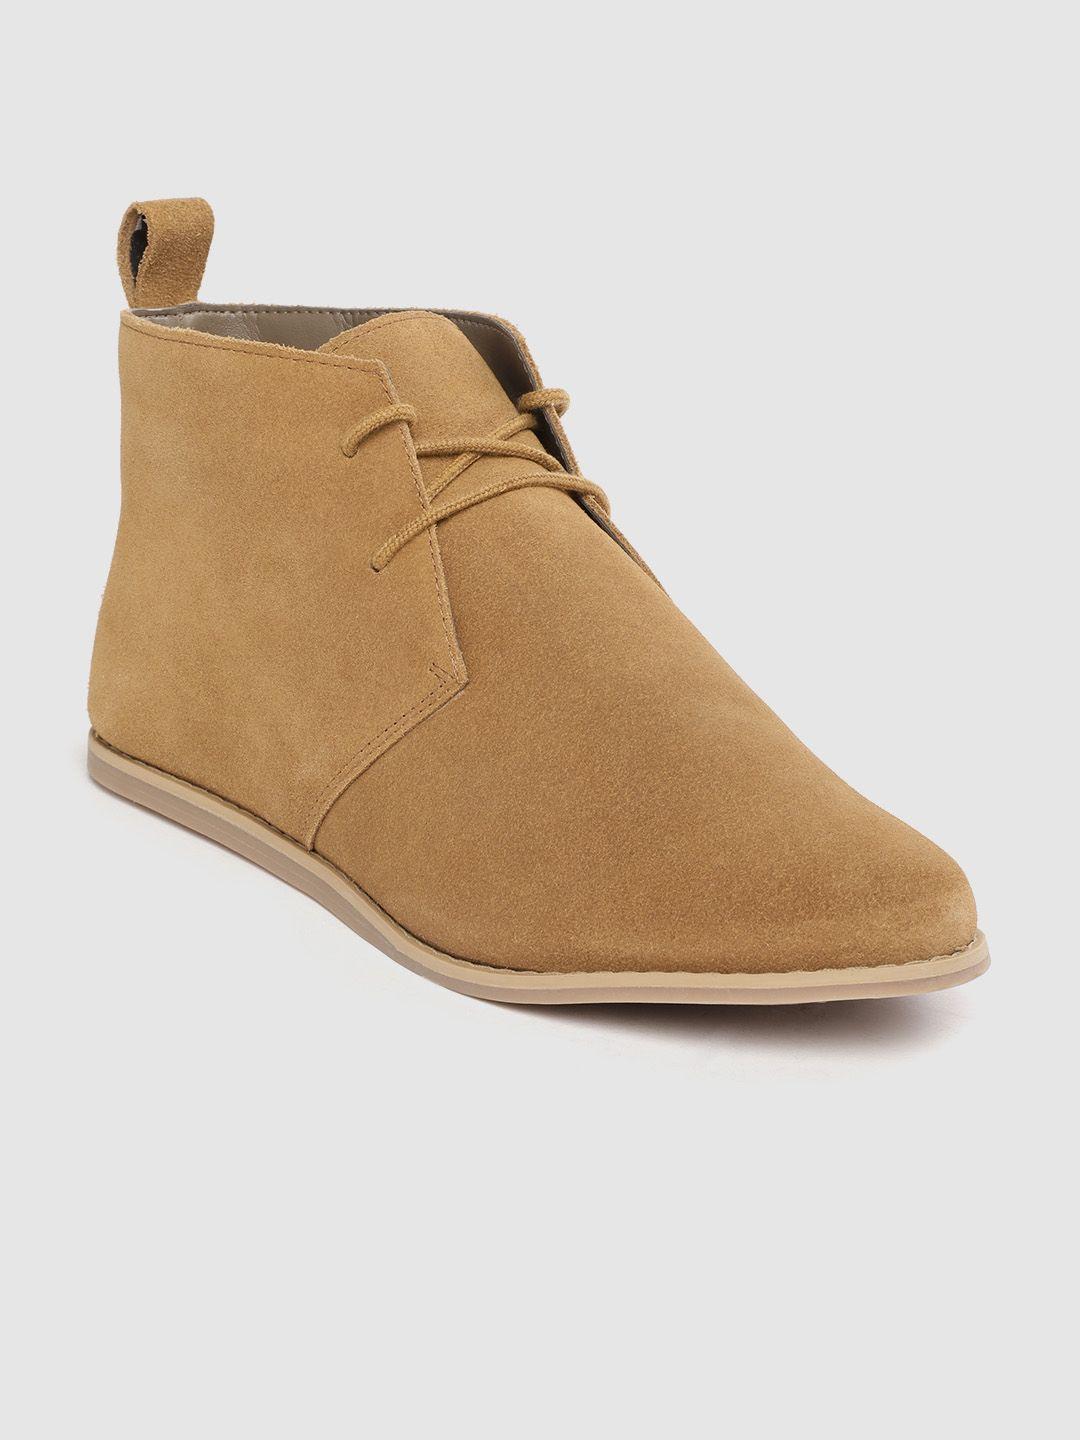 carlton-london-women-camel-brown-solid-mid-top-flat-chukka-boots